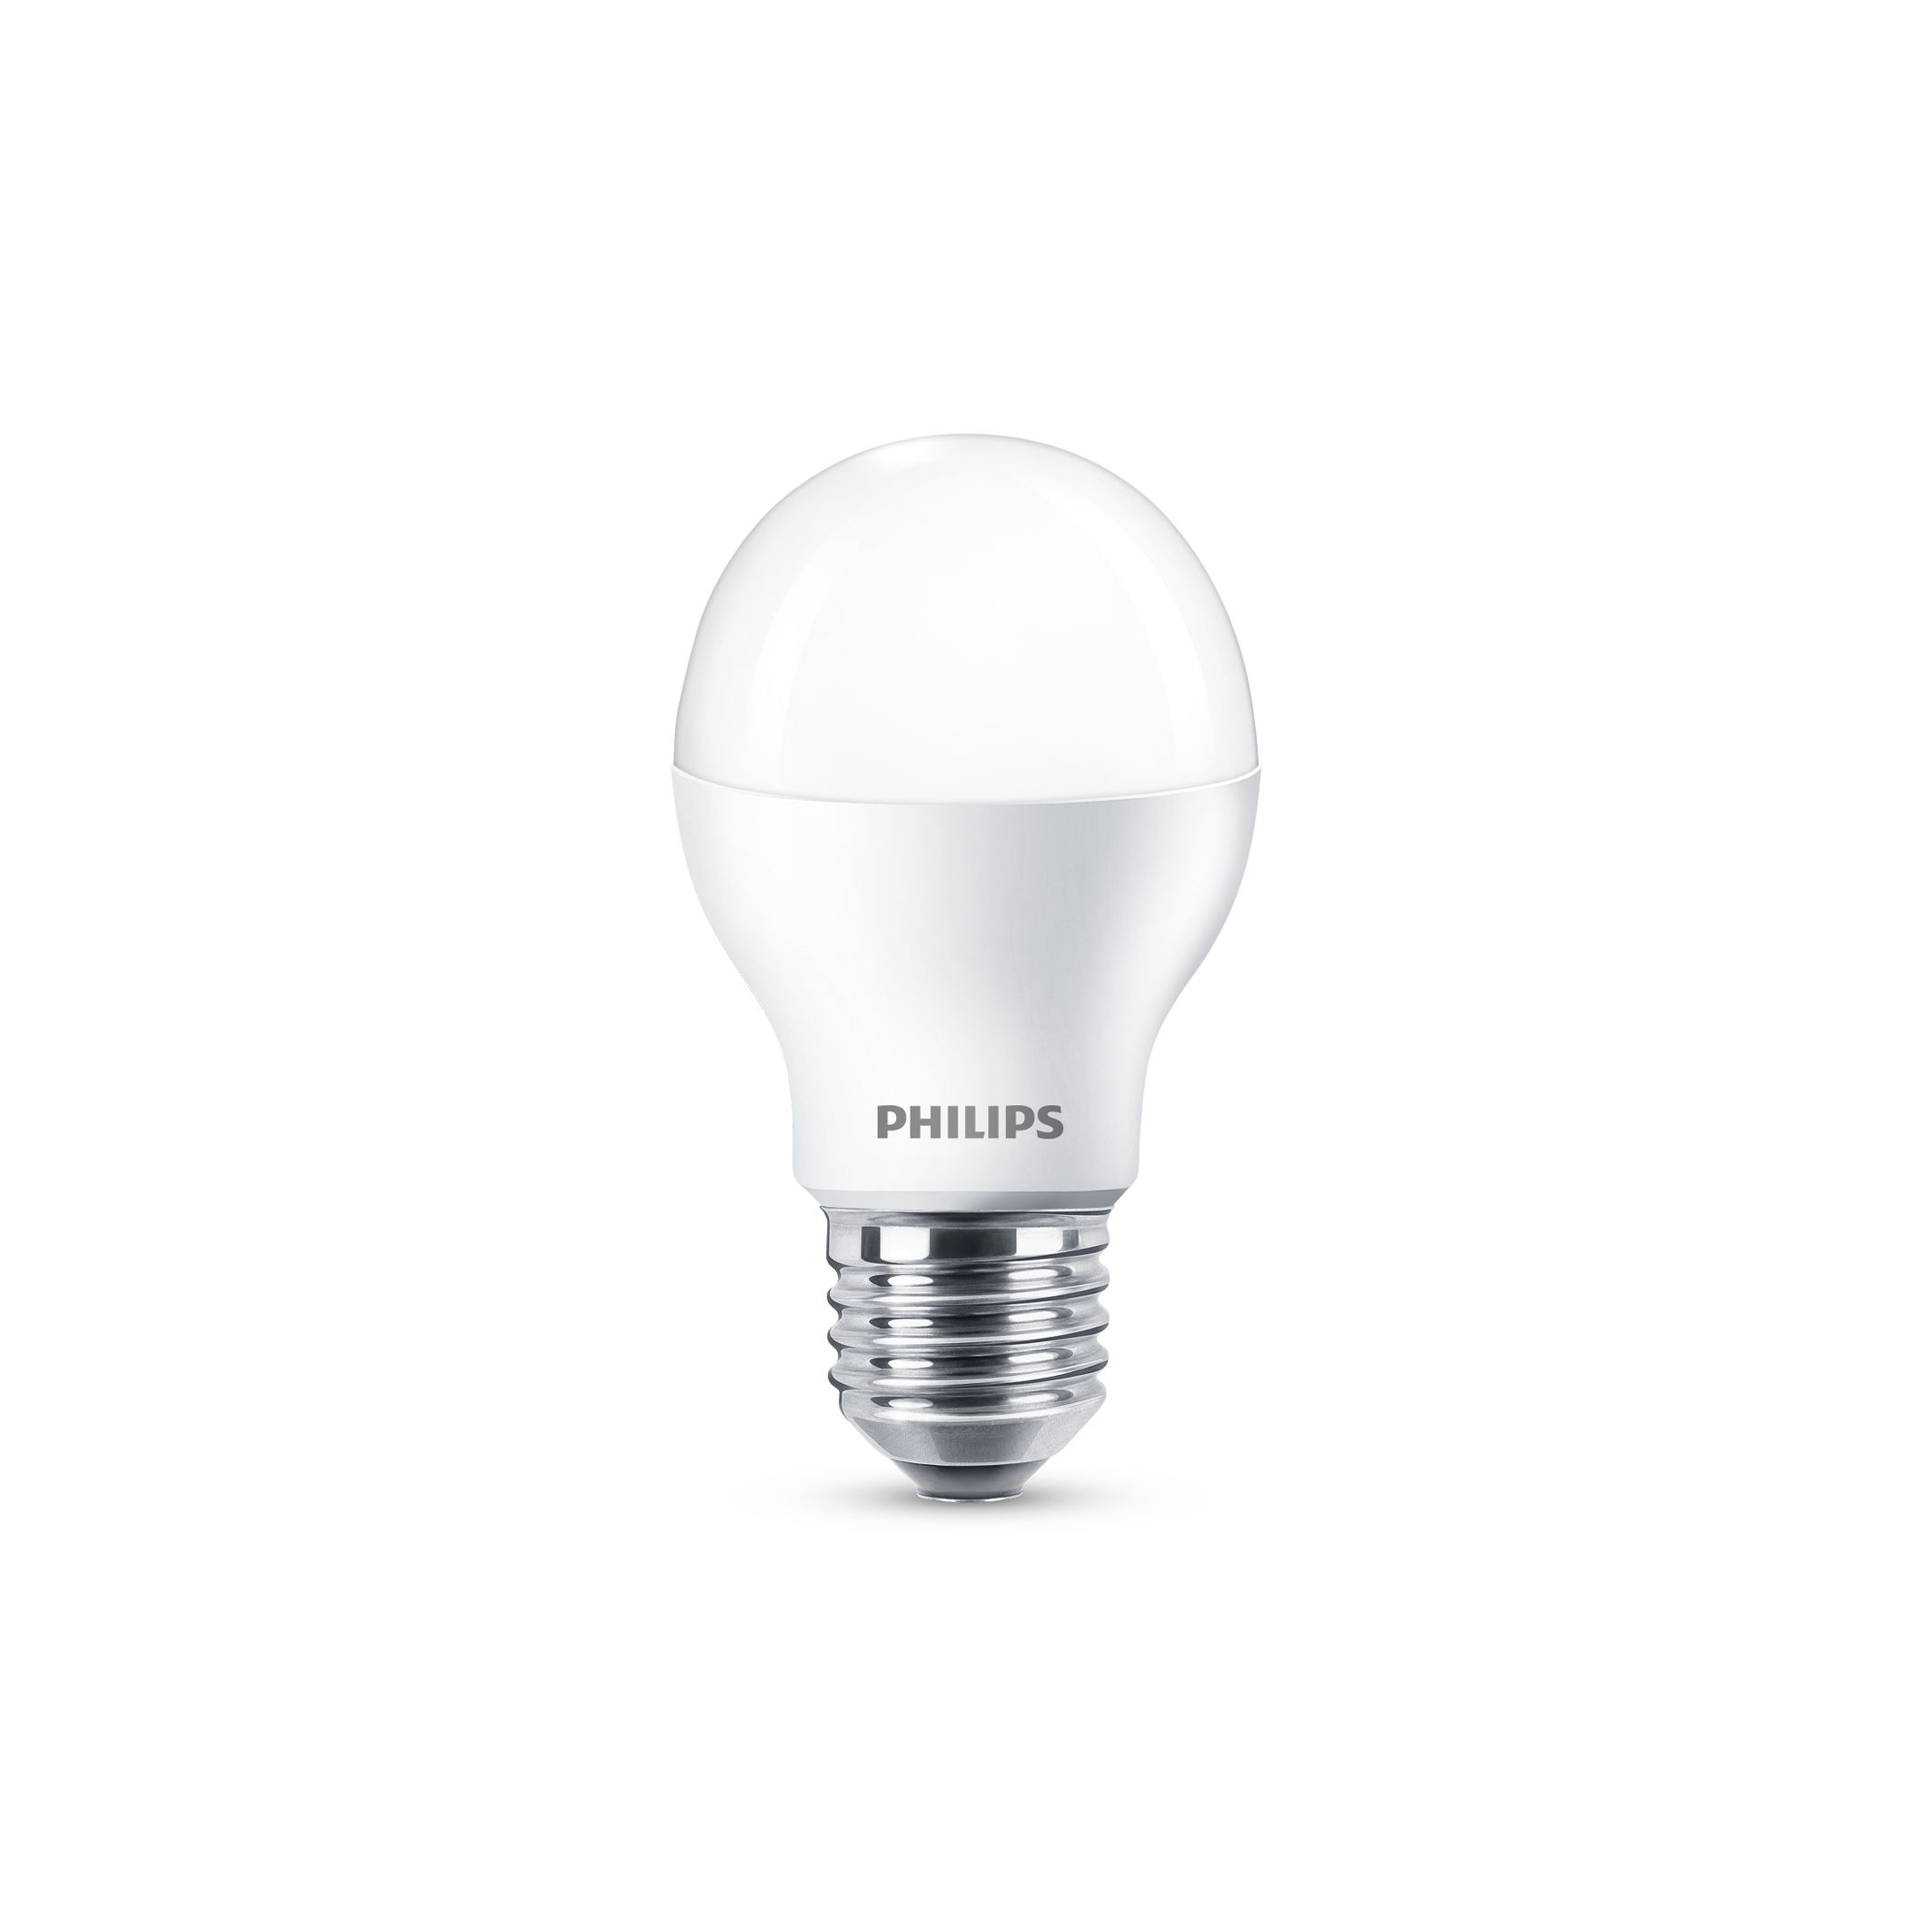 Zakenman directory Verzoenen Essential LED bulbs | 6979537 | Philips lighting